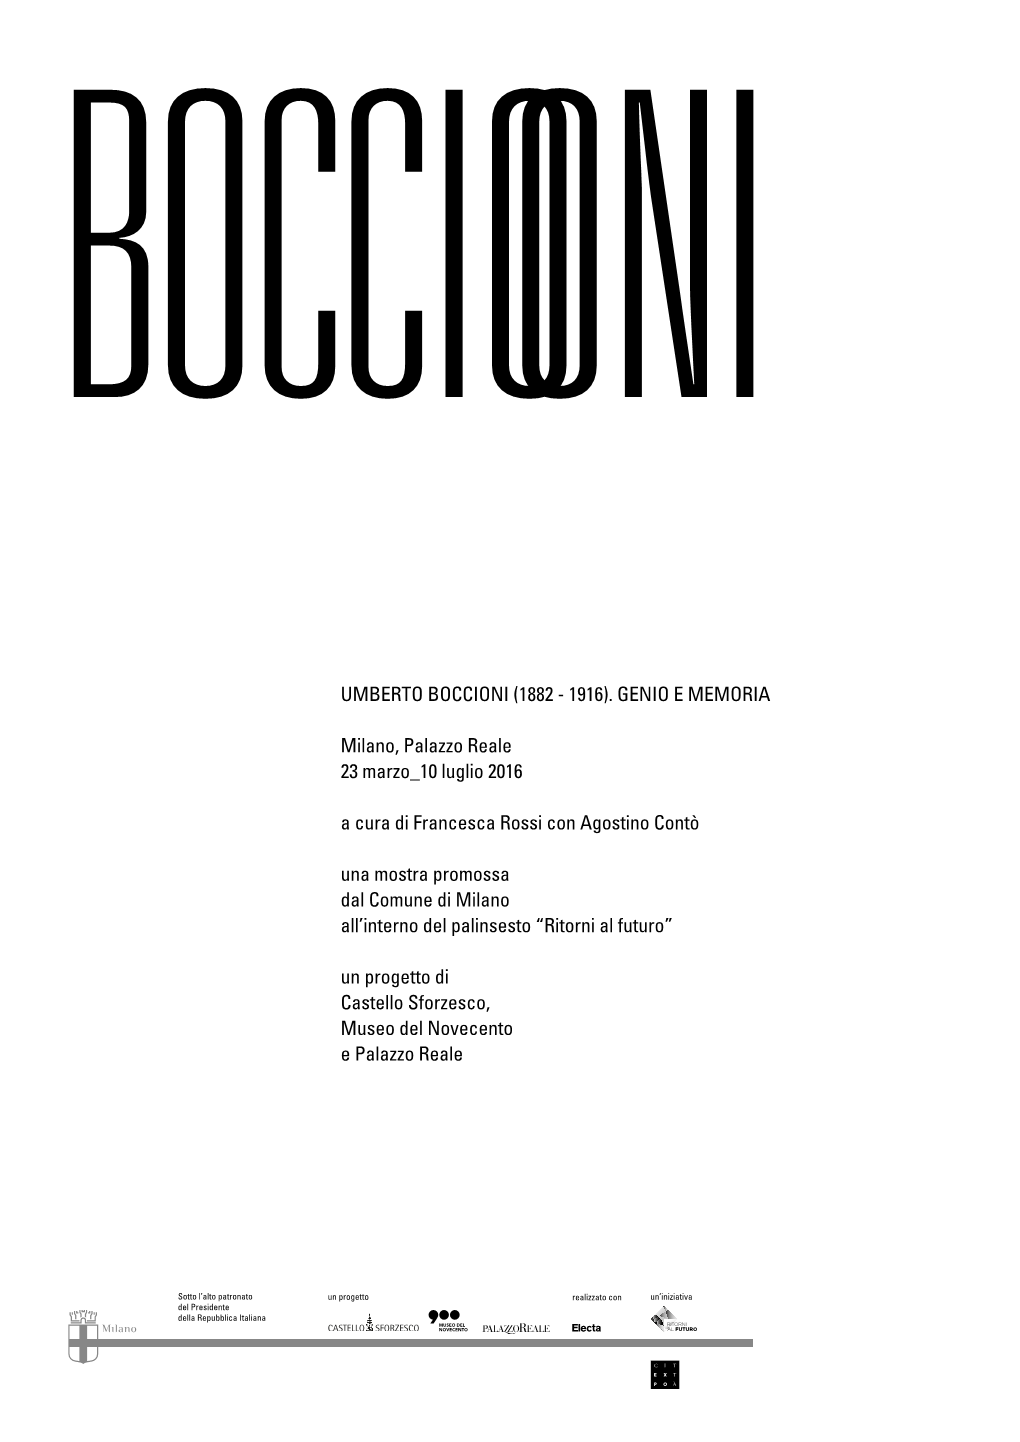 Umberto Boccioni (1882 - 1916)